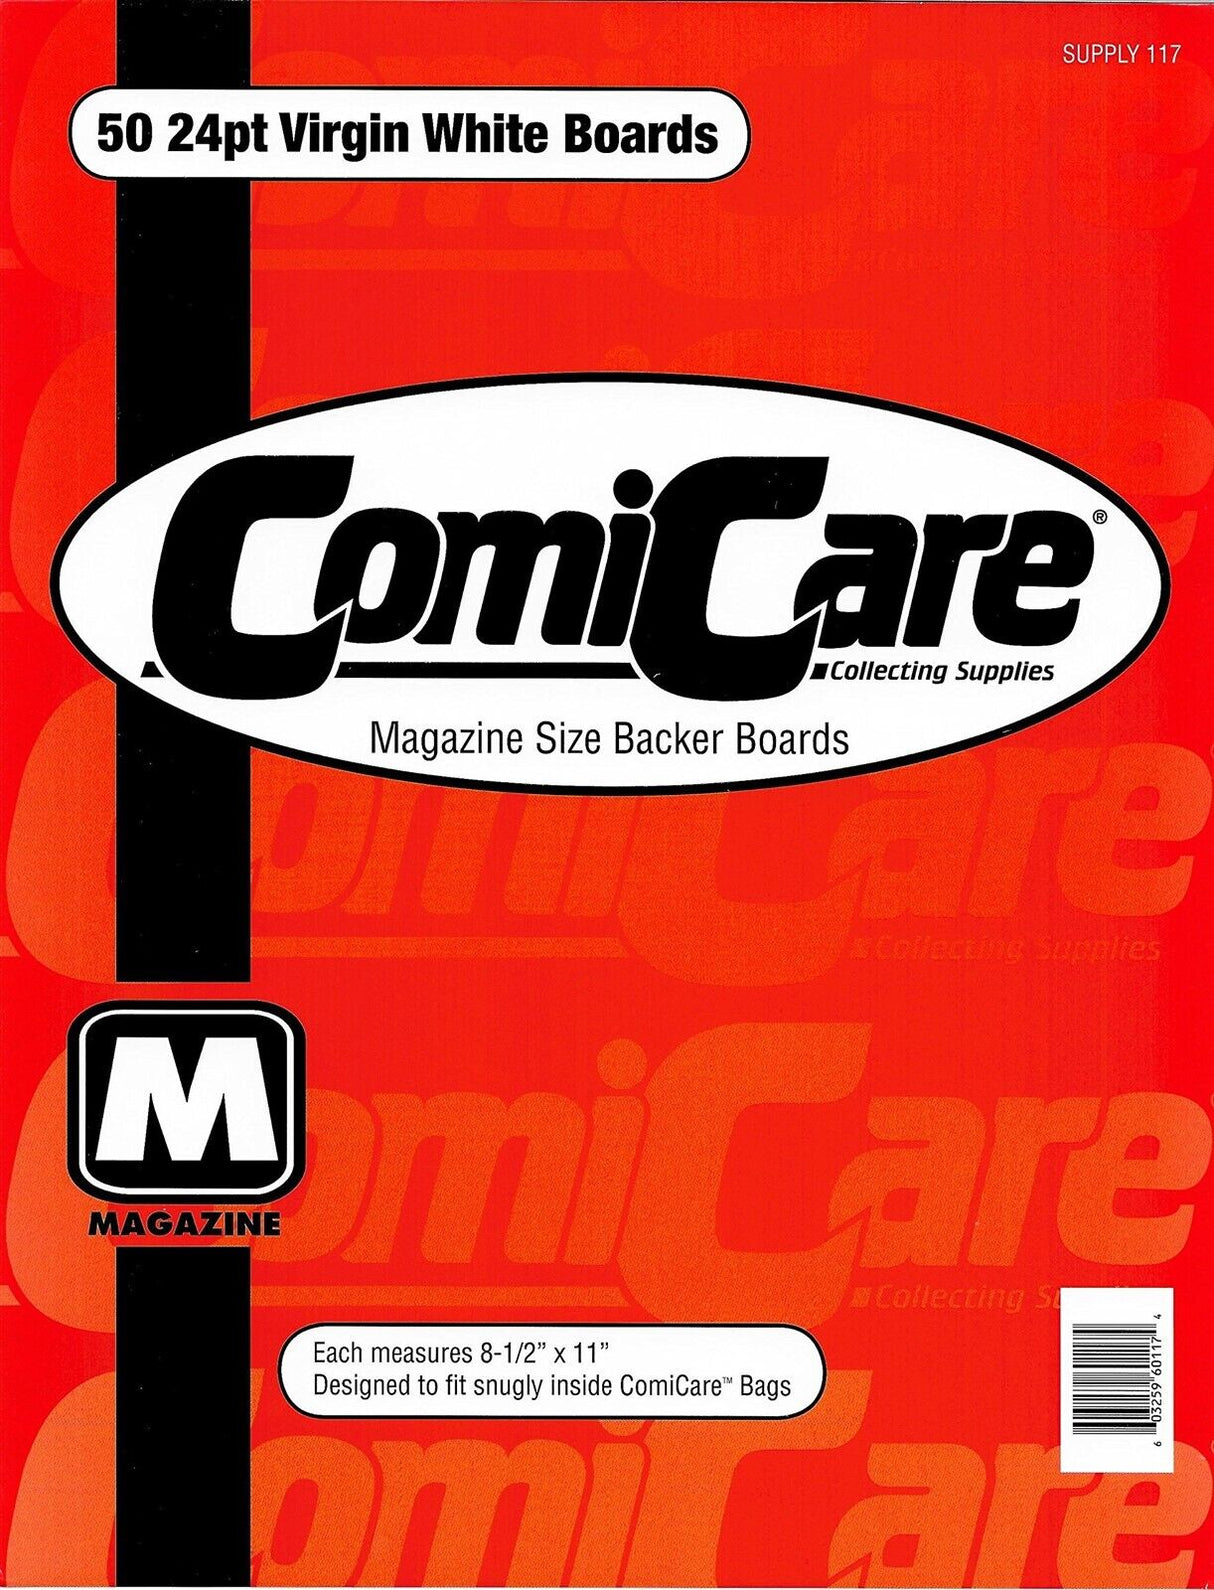 Comicare Magazine Size Backer Boards (50 Pack)